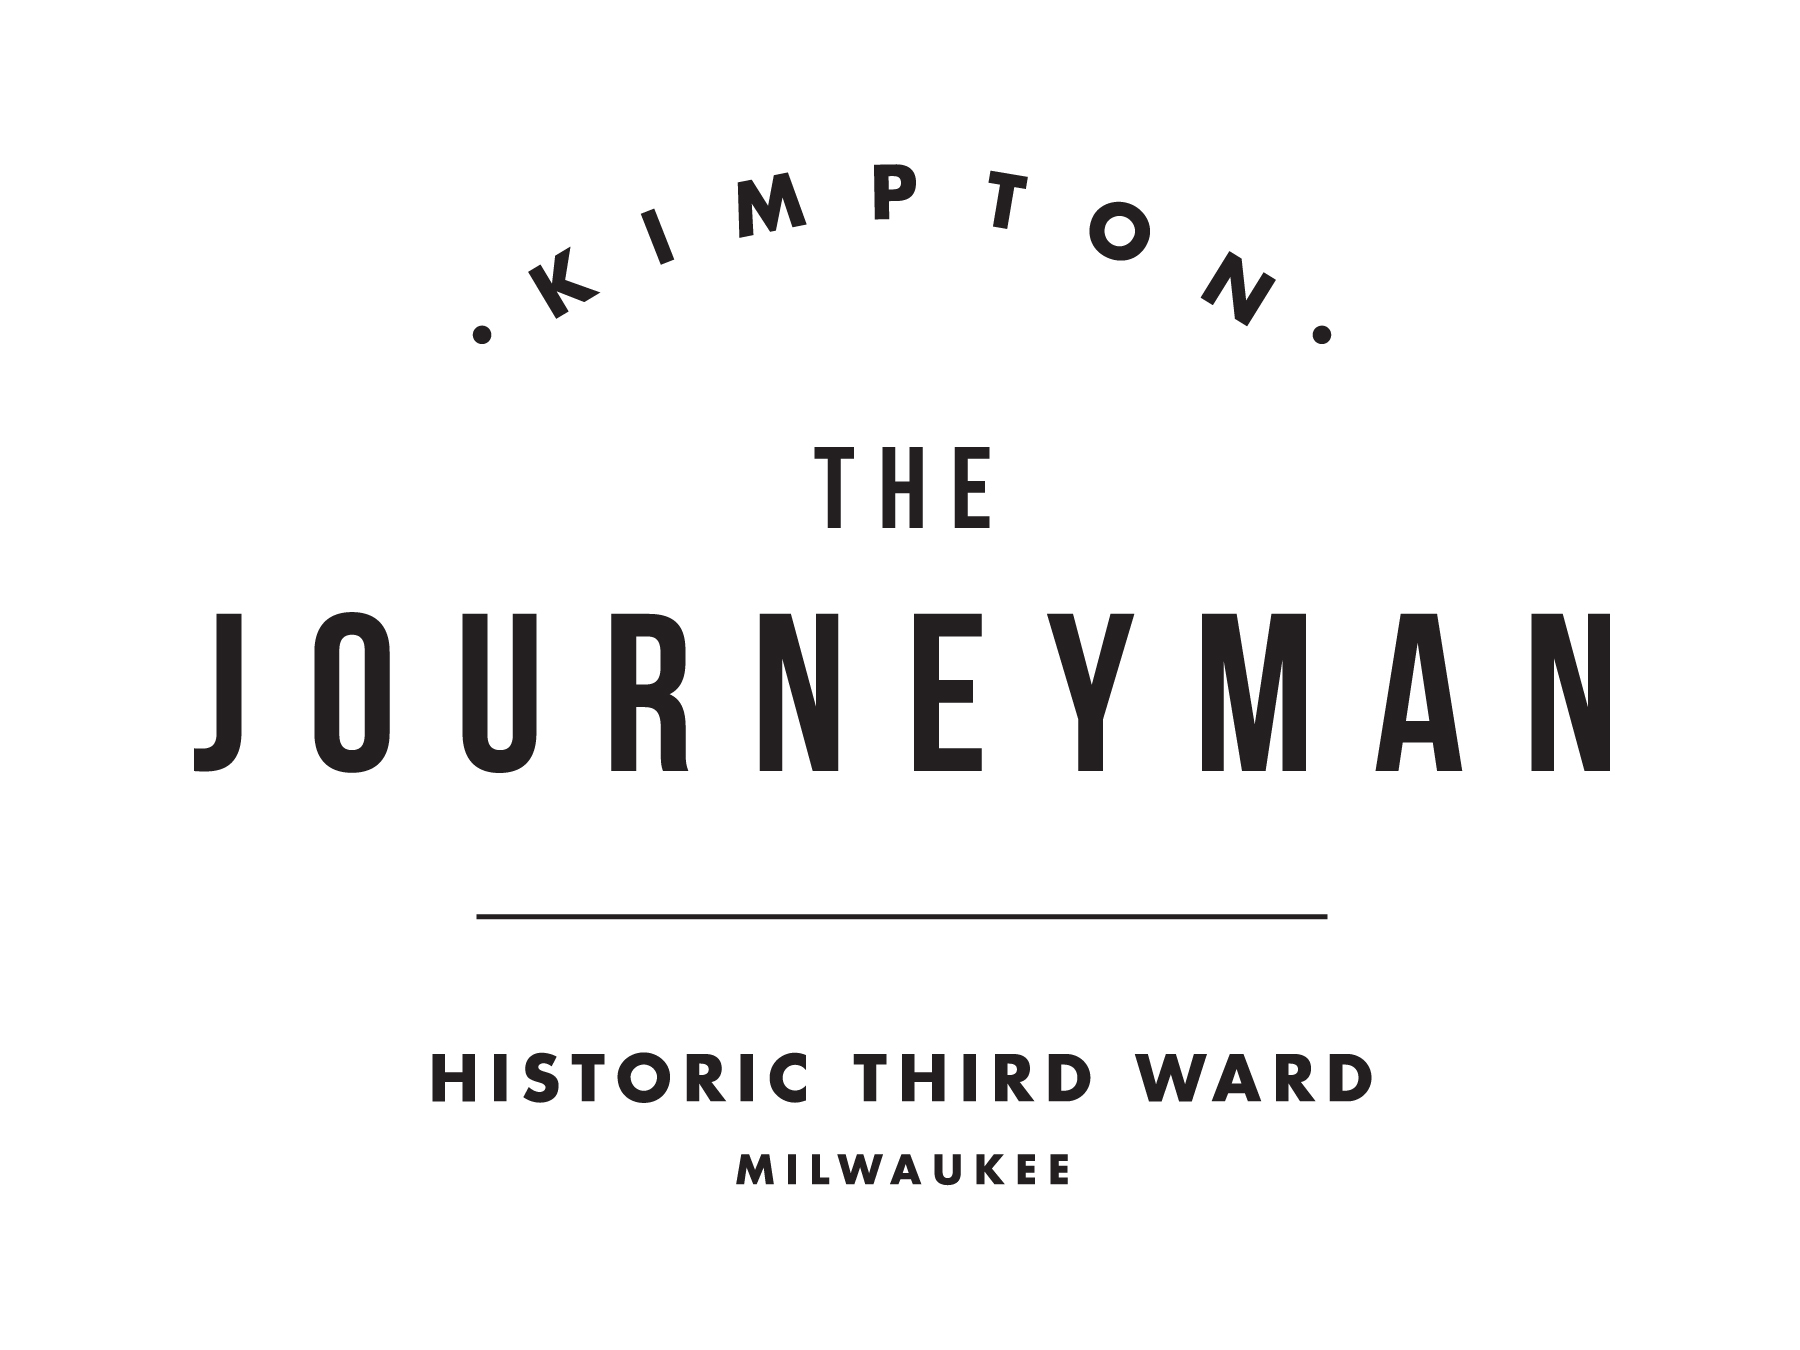 Kimpton Journeyman